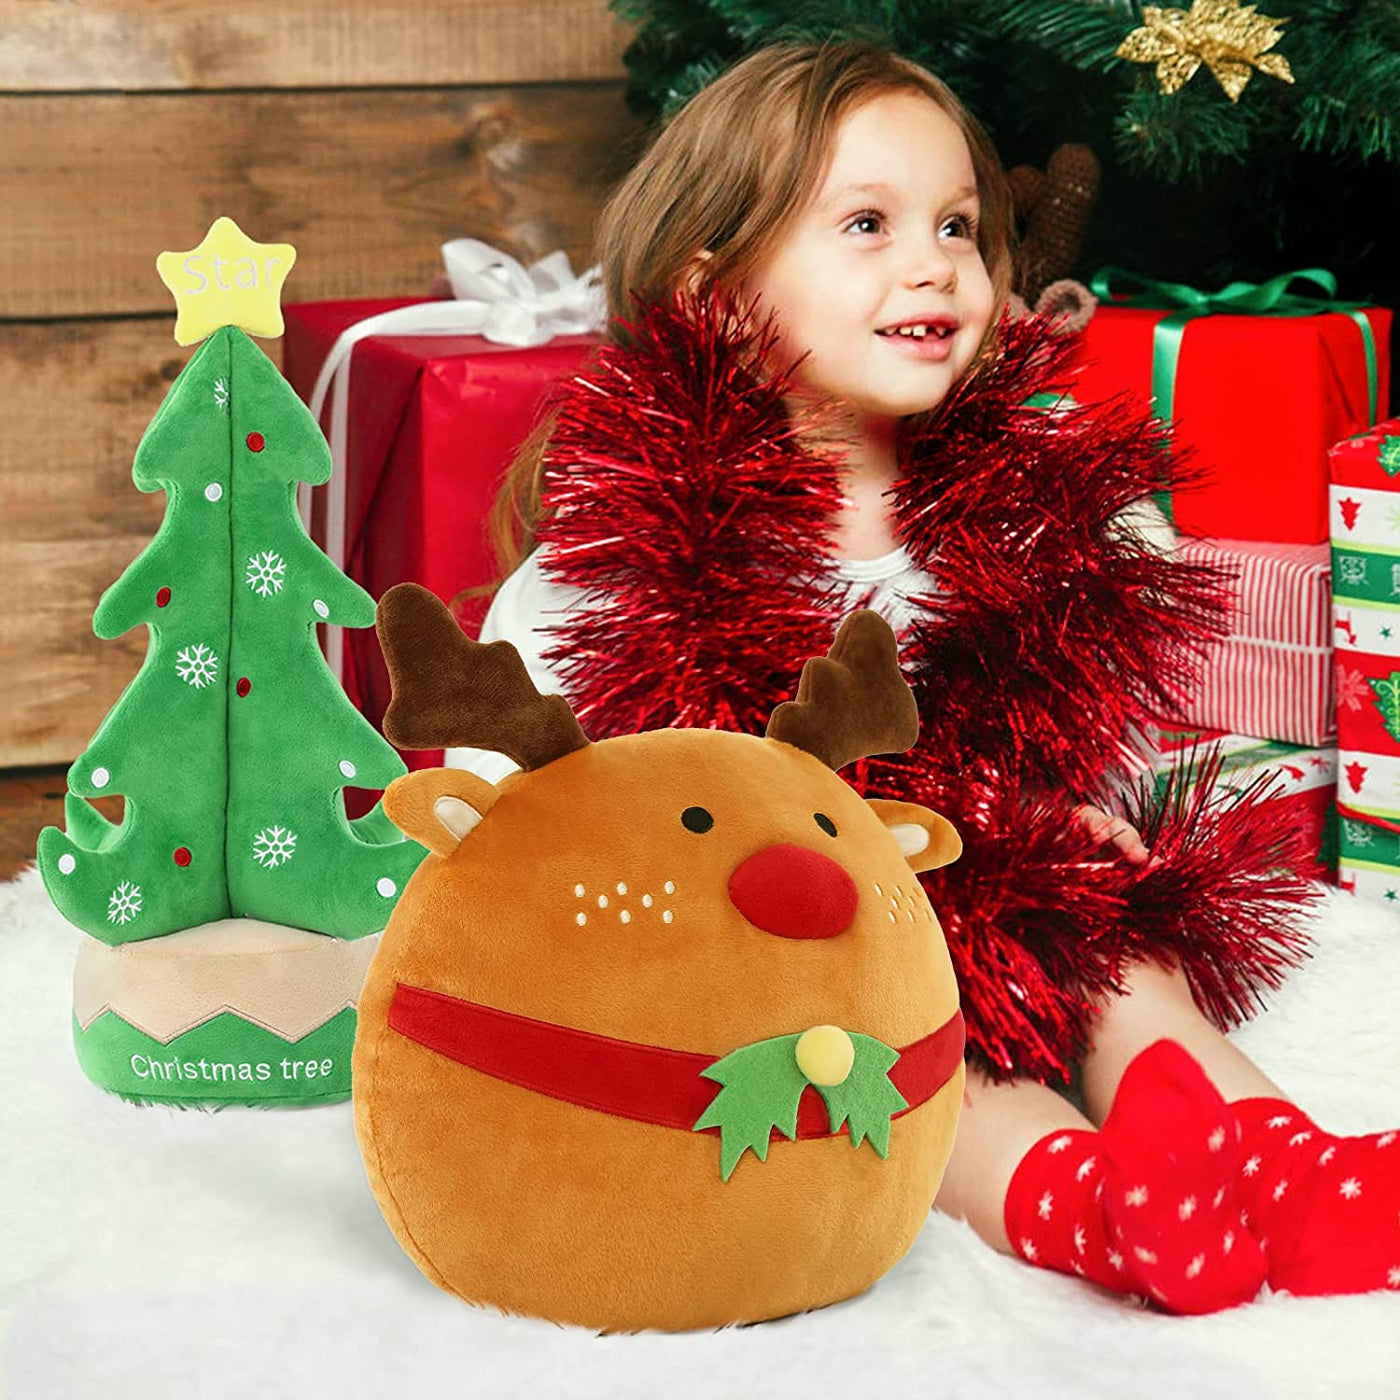 Christmas Tree Plush Toy, 16 Inches - Morismos Stuffed Animals